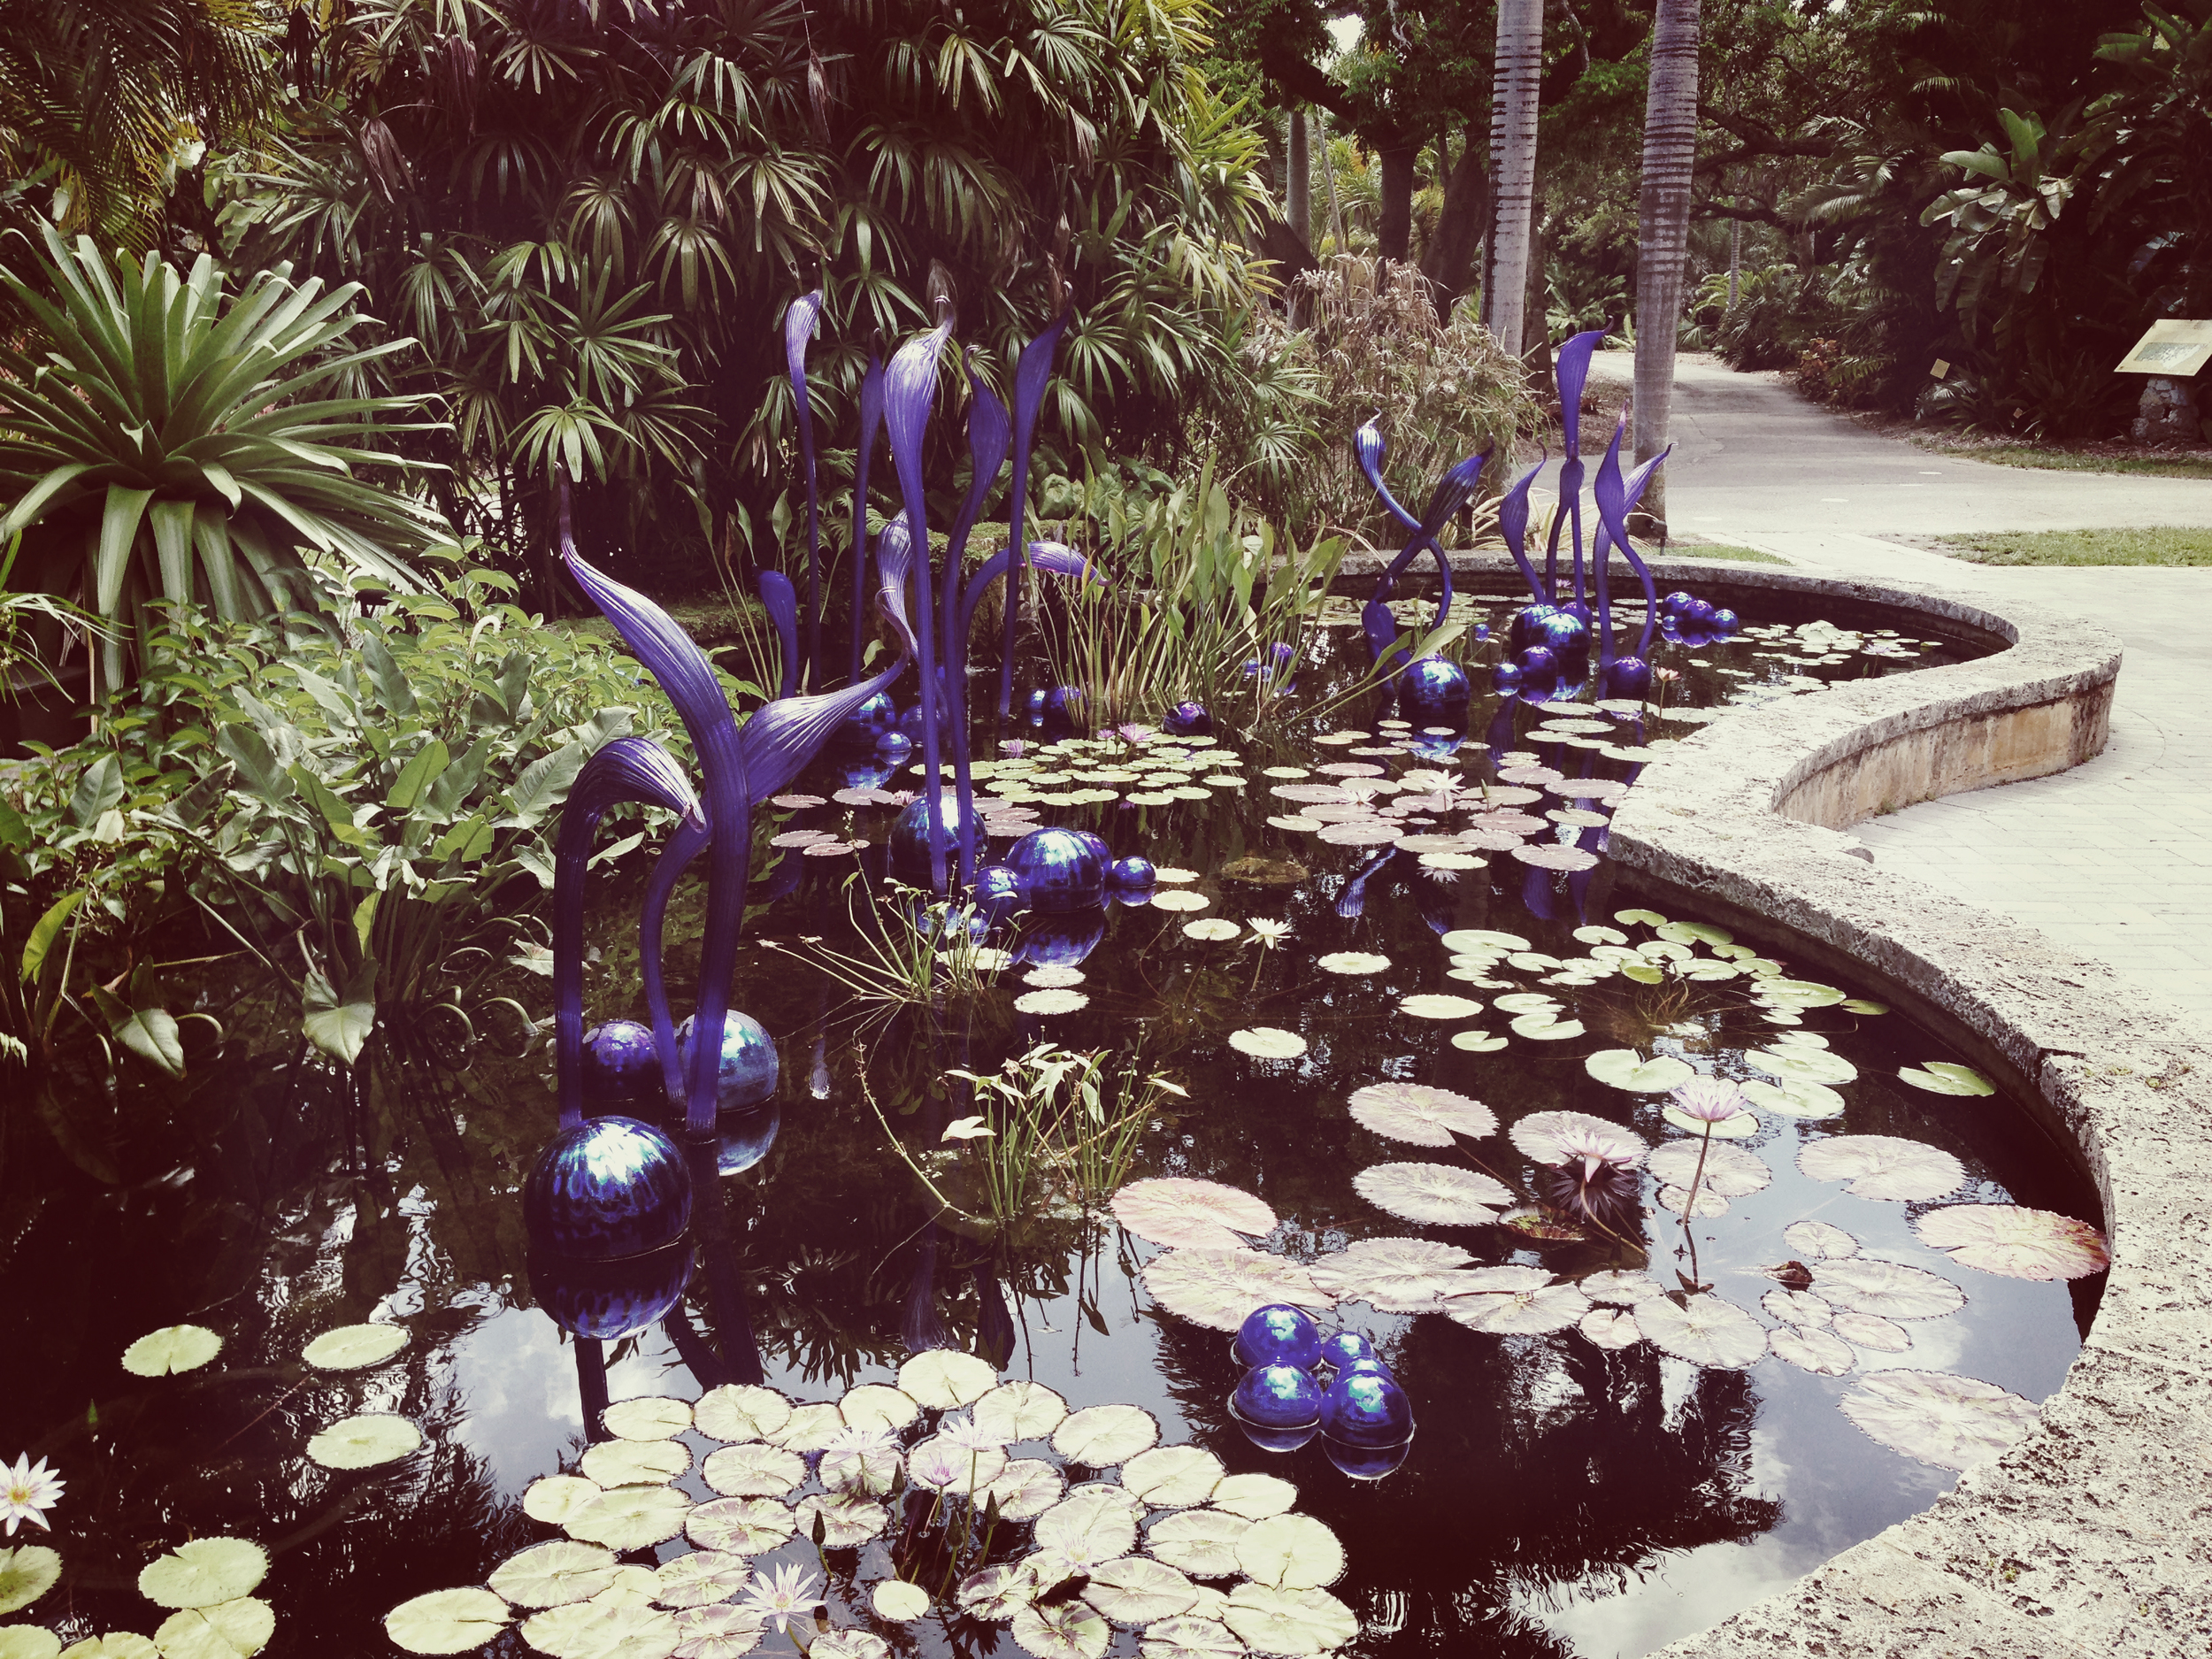 Chihuly Art/Fairchild Botanical Gardens